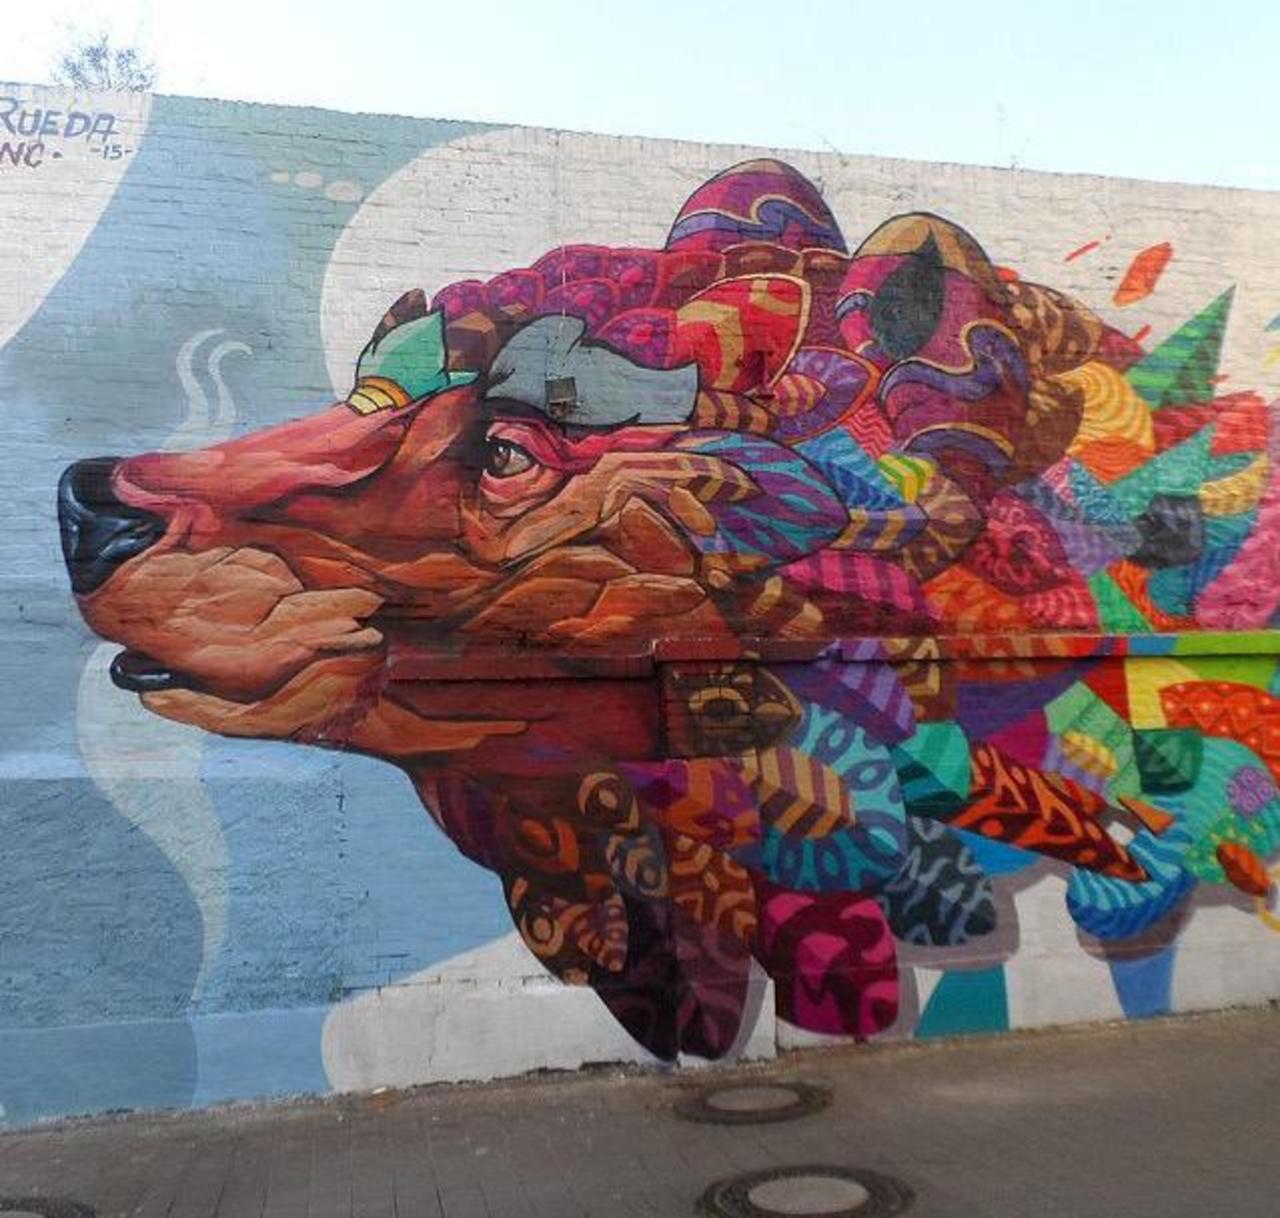 Farid Rueda Street Art 

#art #graffiti #mural #streetart http://t.co/74bylTDXmq